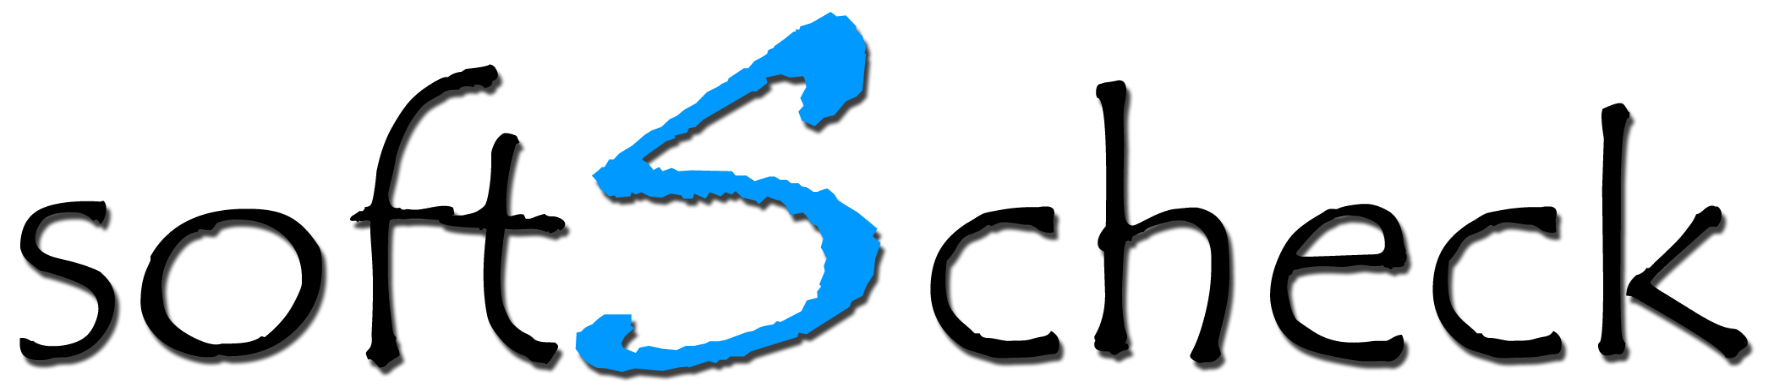 Softscheck Logo